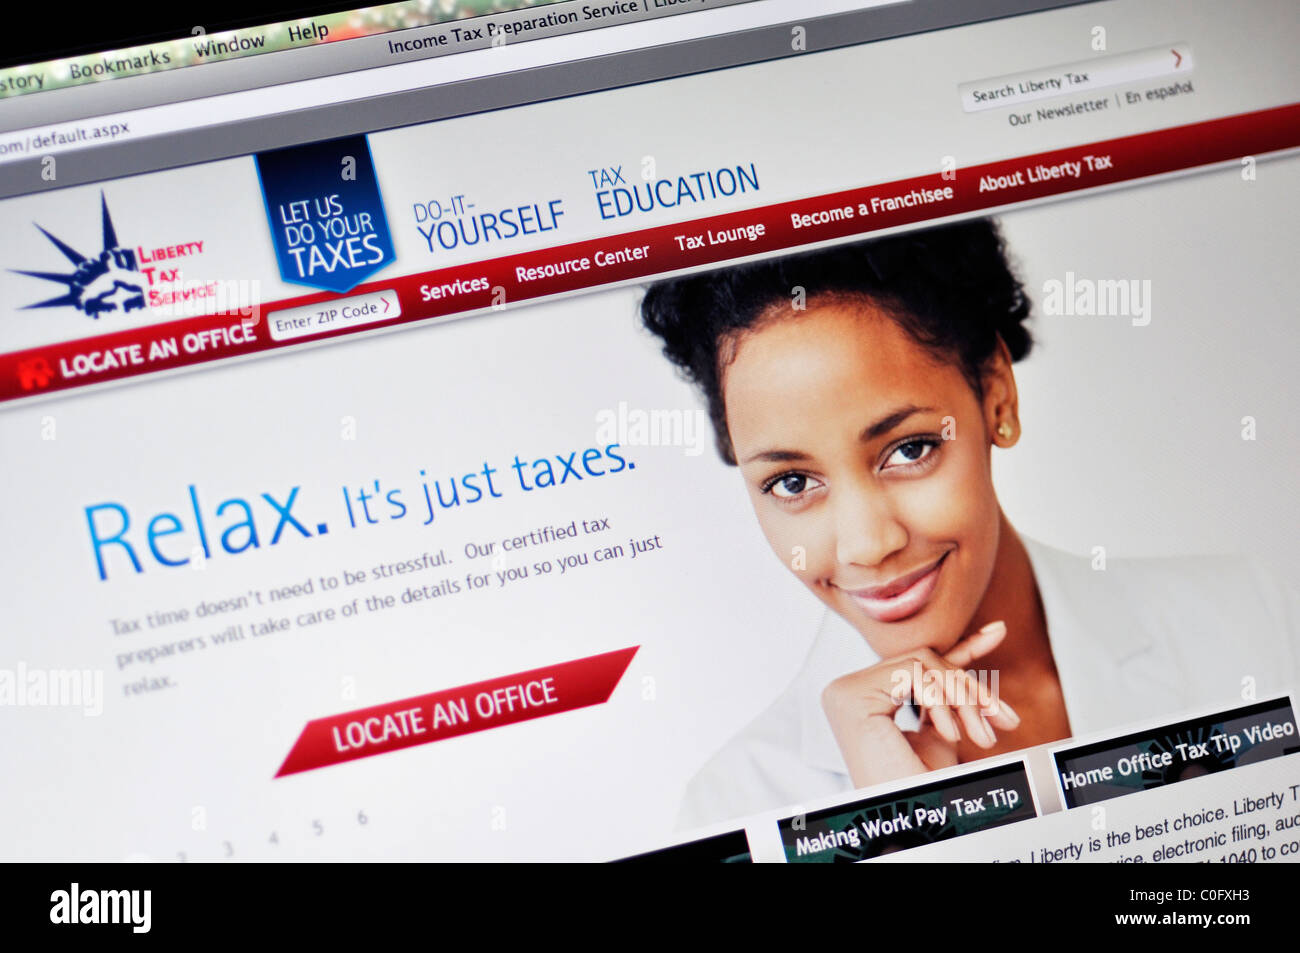 Liberty Tax Service - income tax preparation website Stock Photo